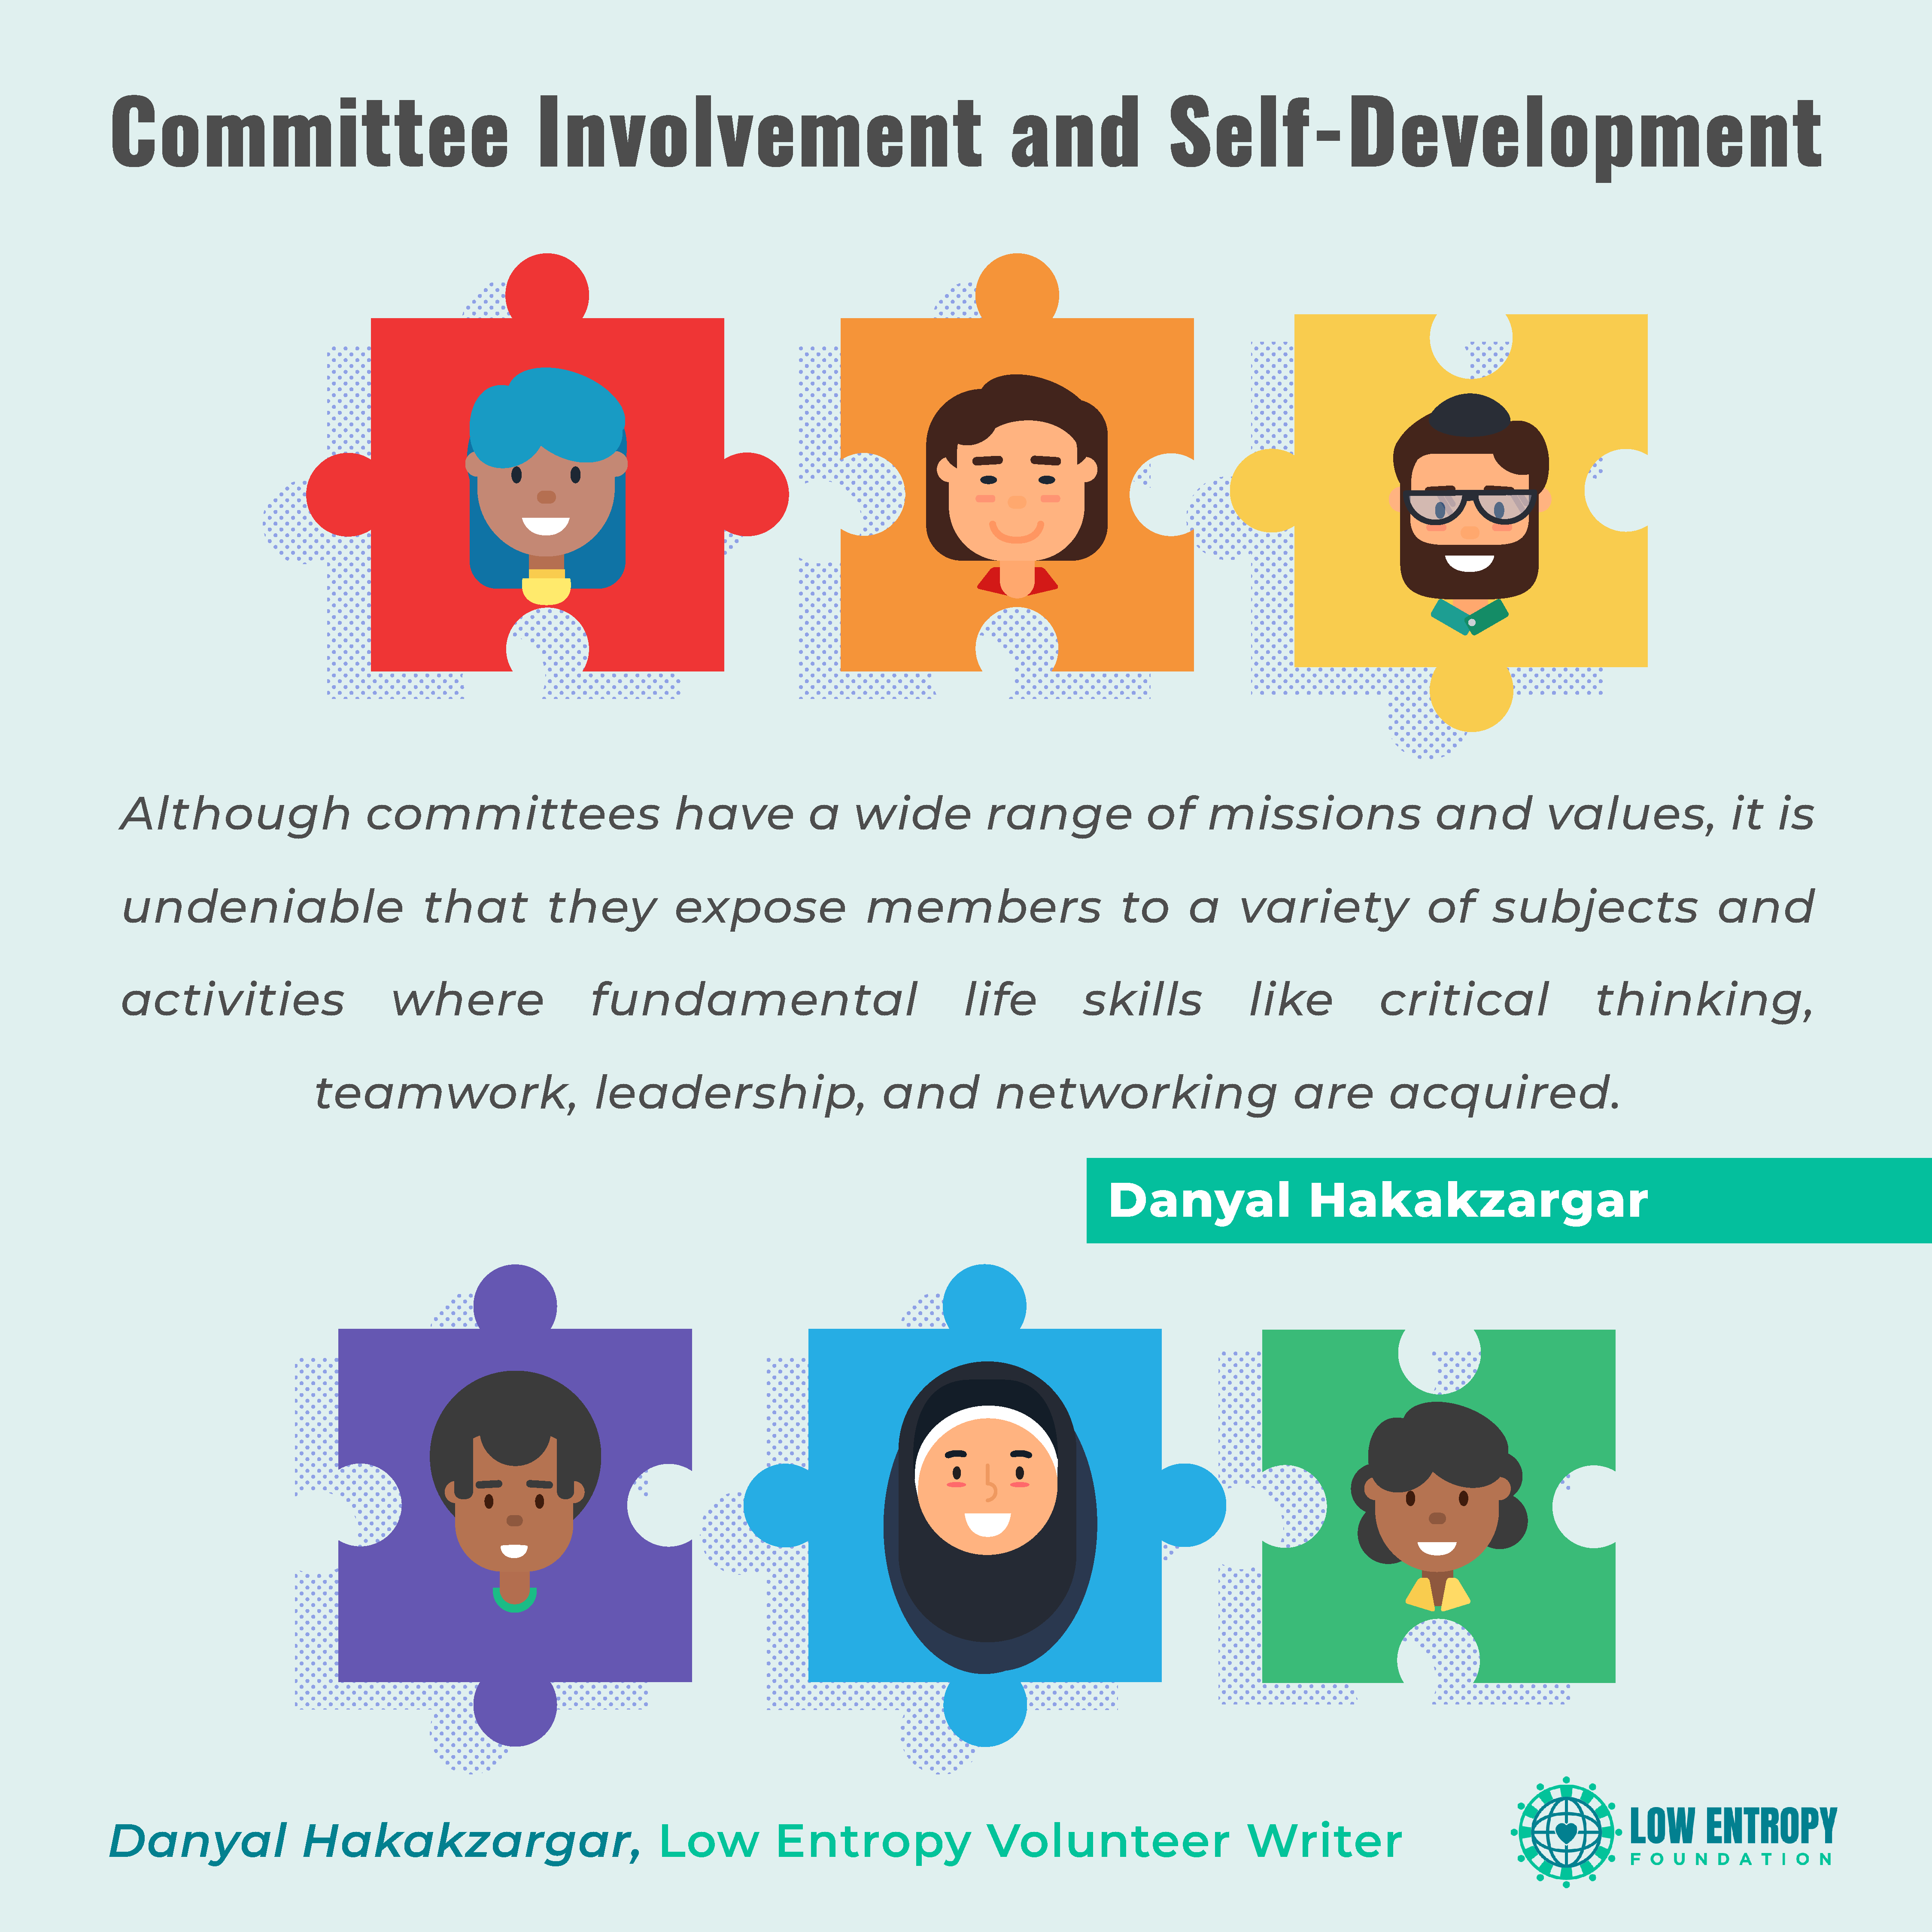 Committee Involvement and Self-Development